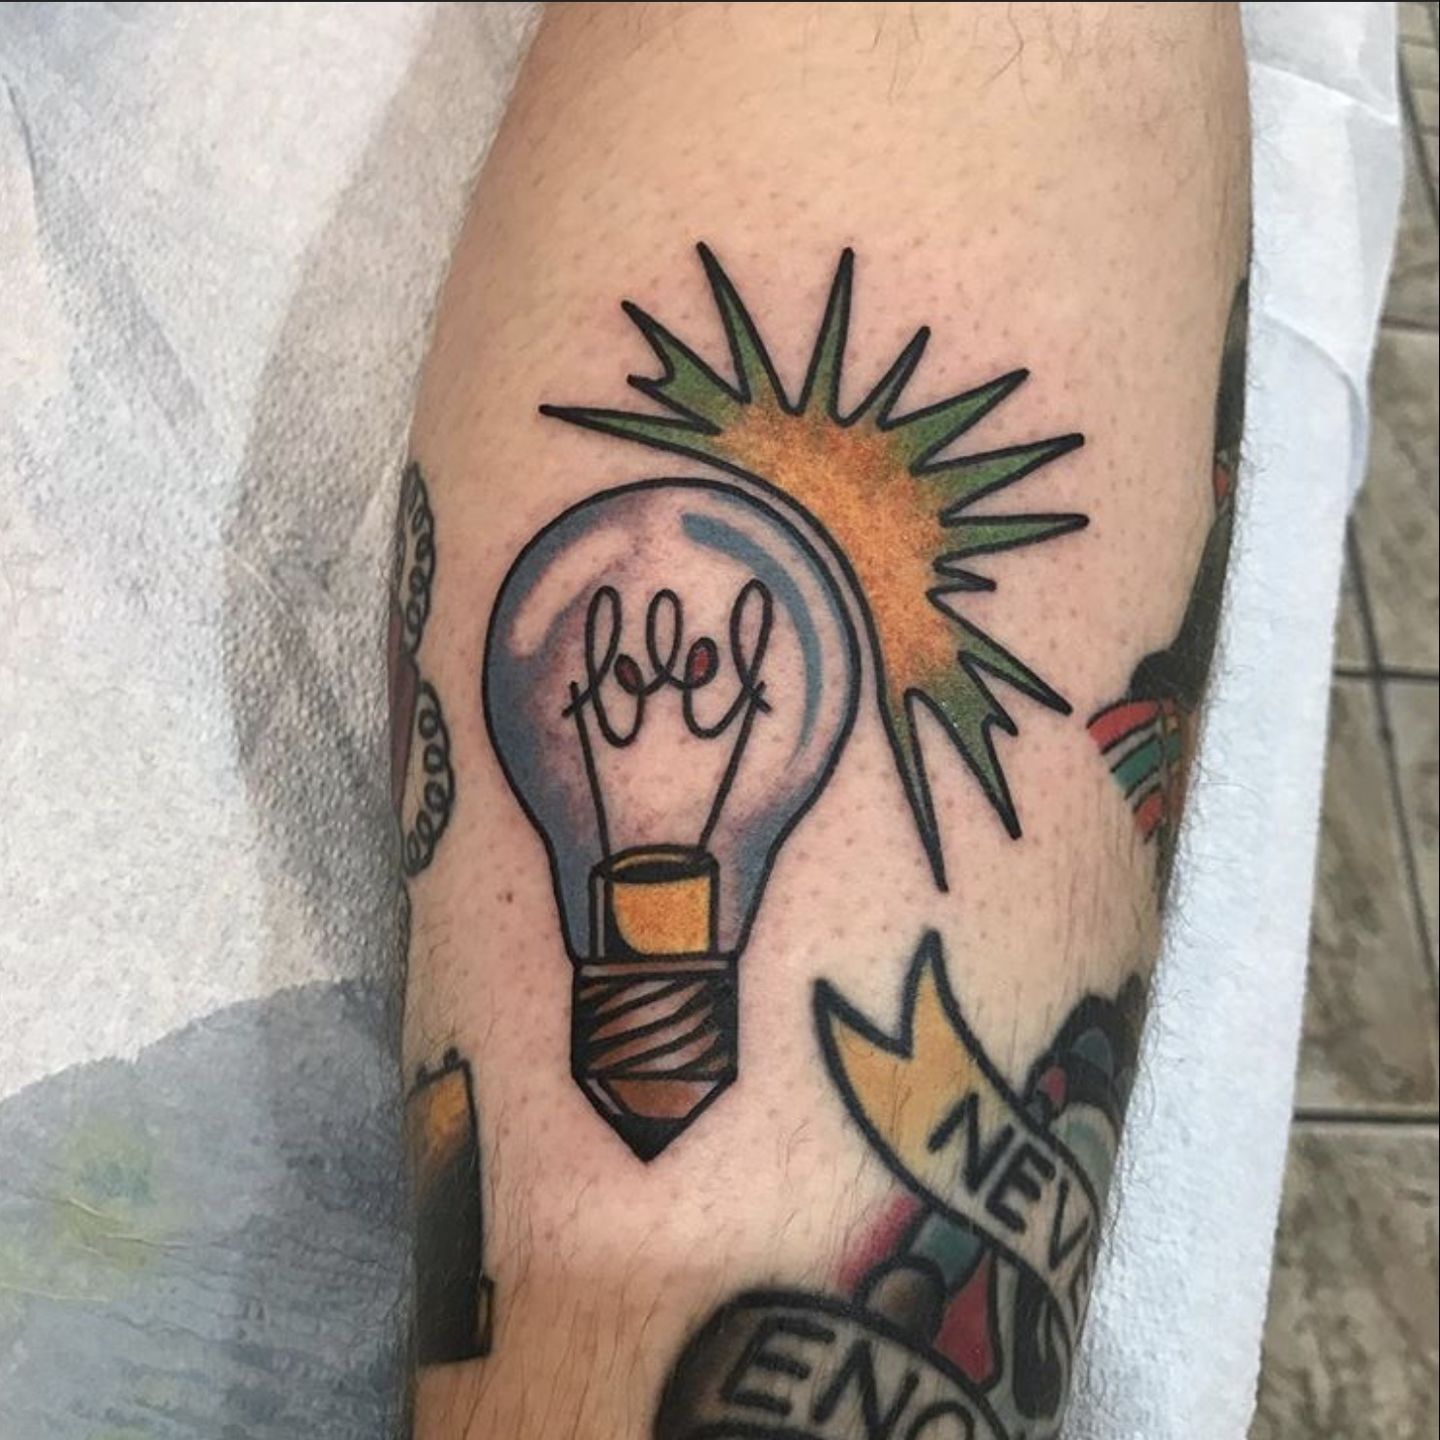 Single needle elephant light bulb tattoo on the inner